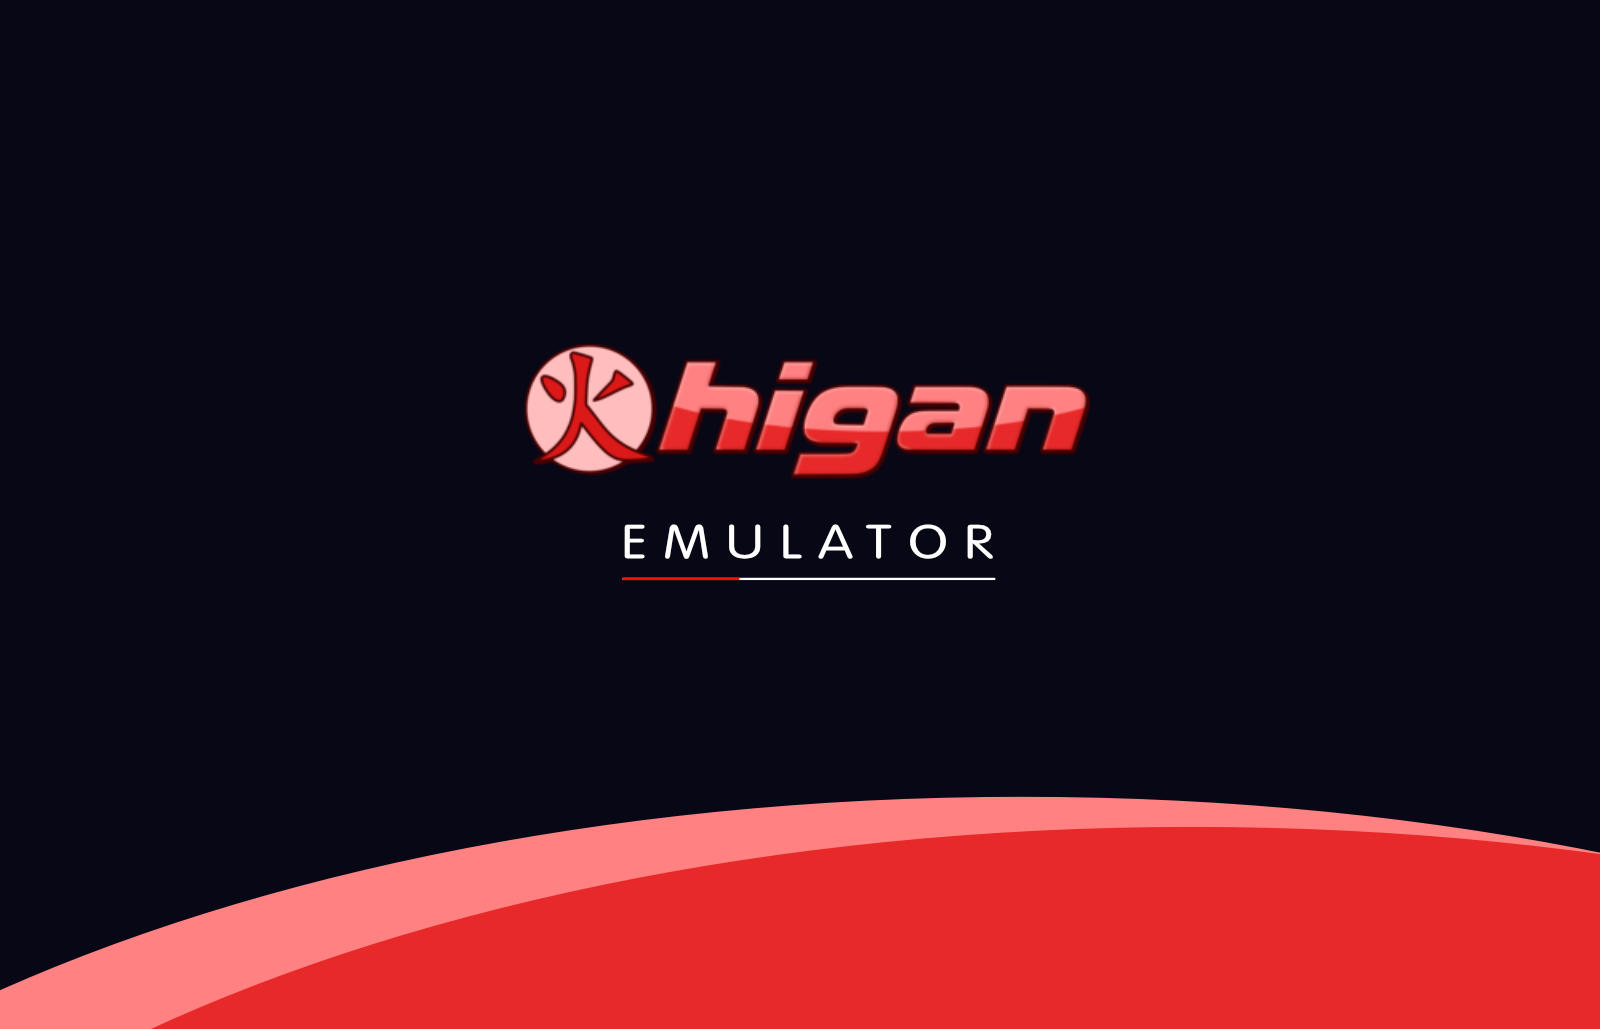 Higan is a Snes Emulator for PC, Windows